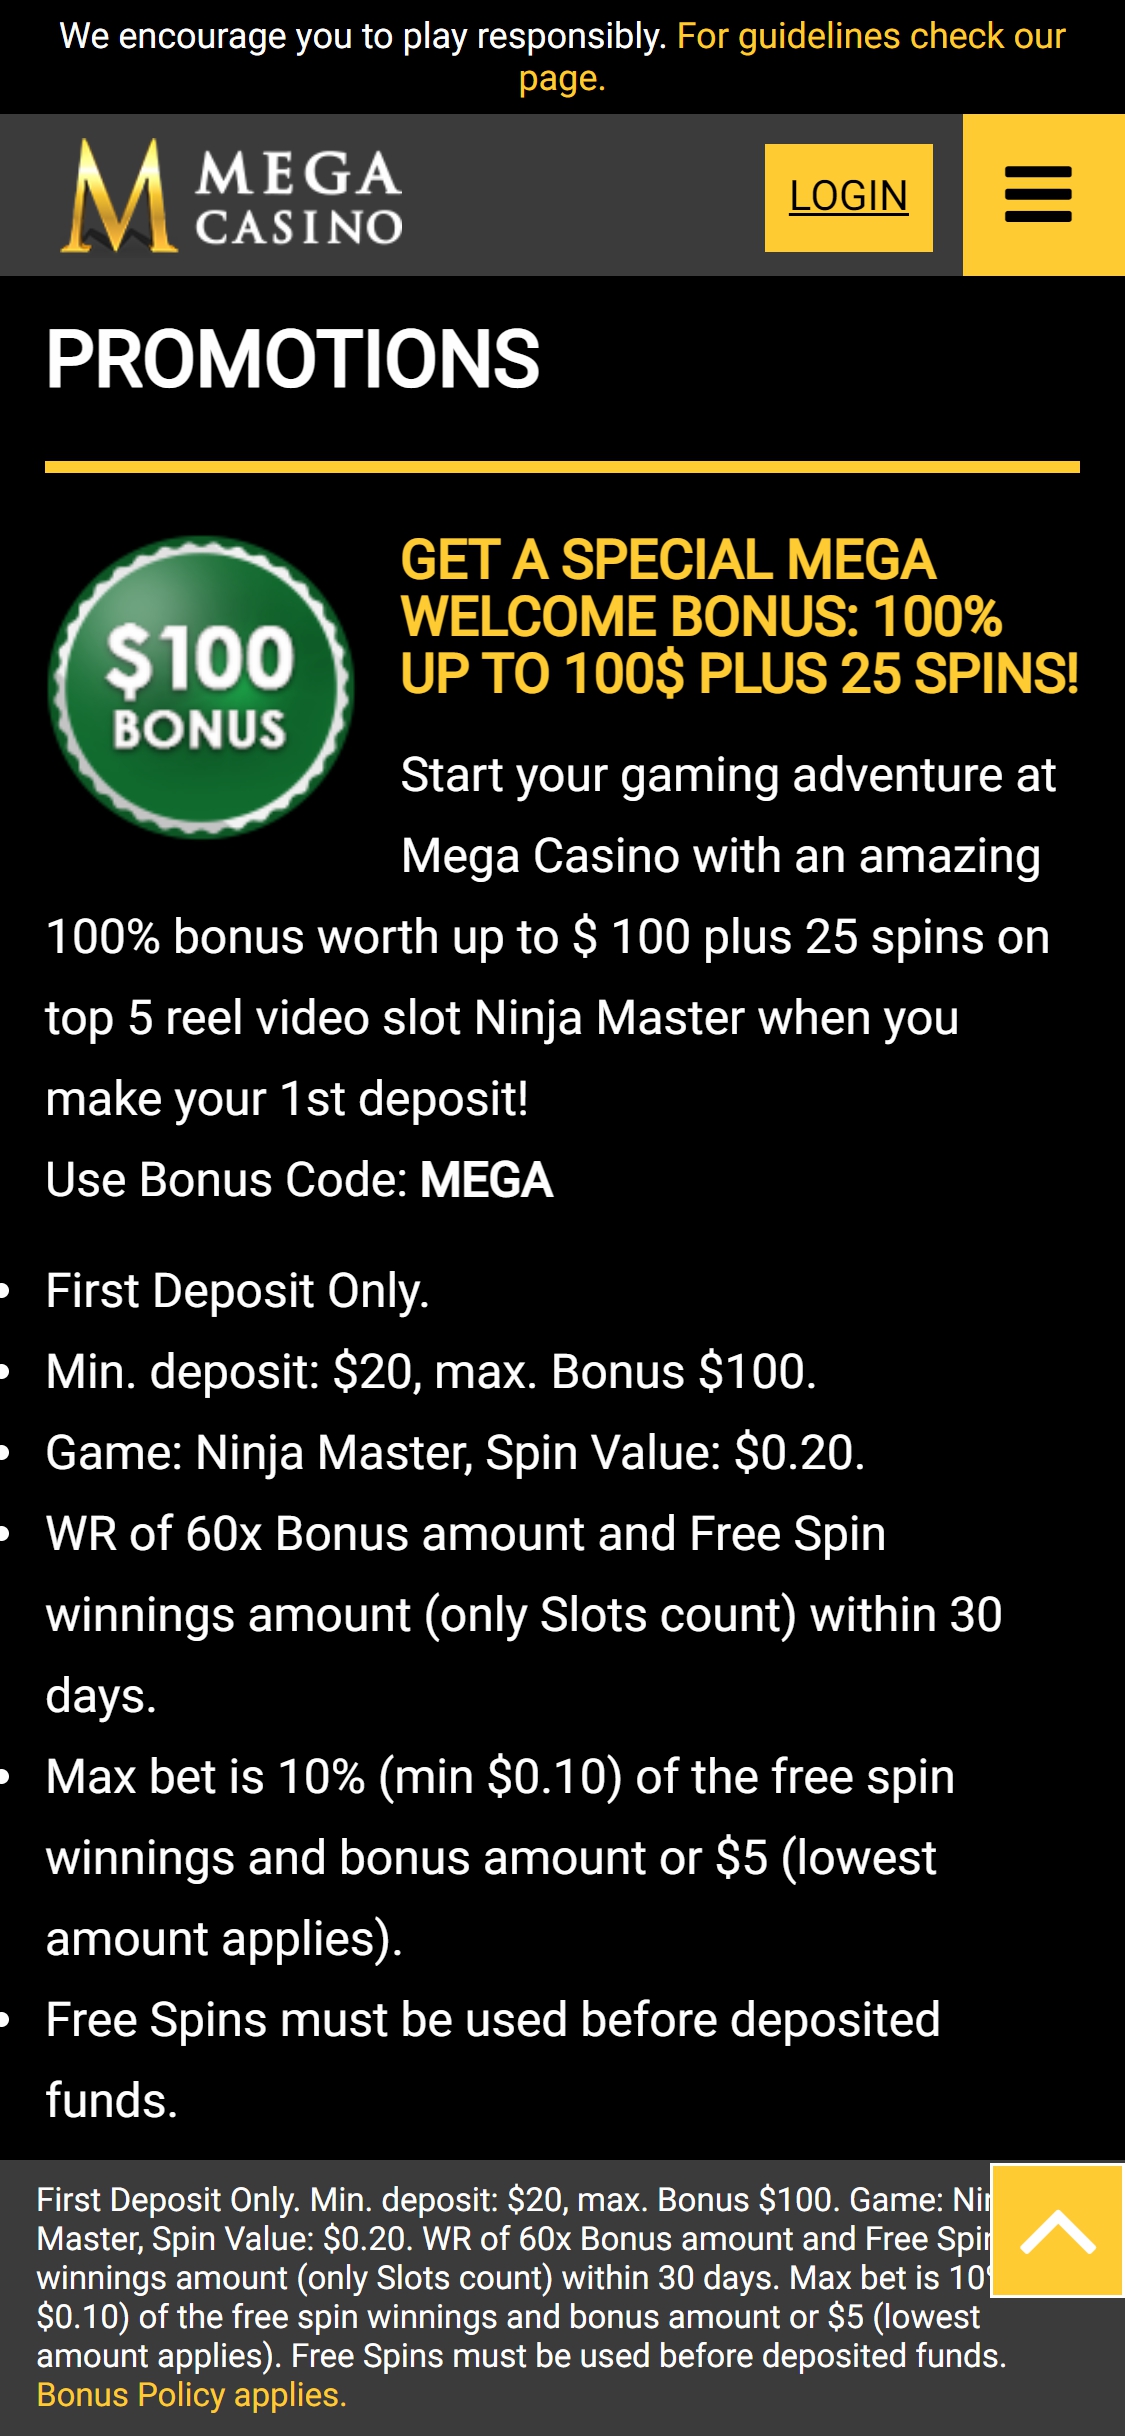 Mega Casino Mobile No Deposit Bonus Review